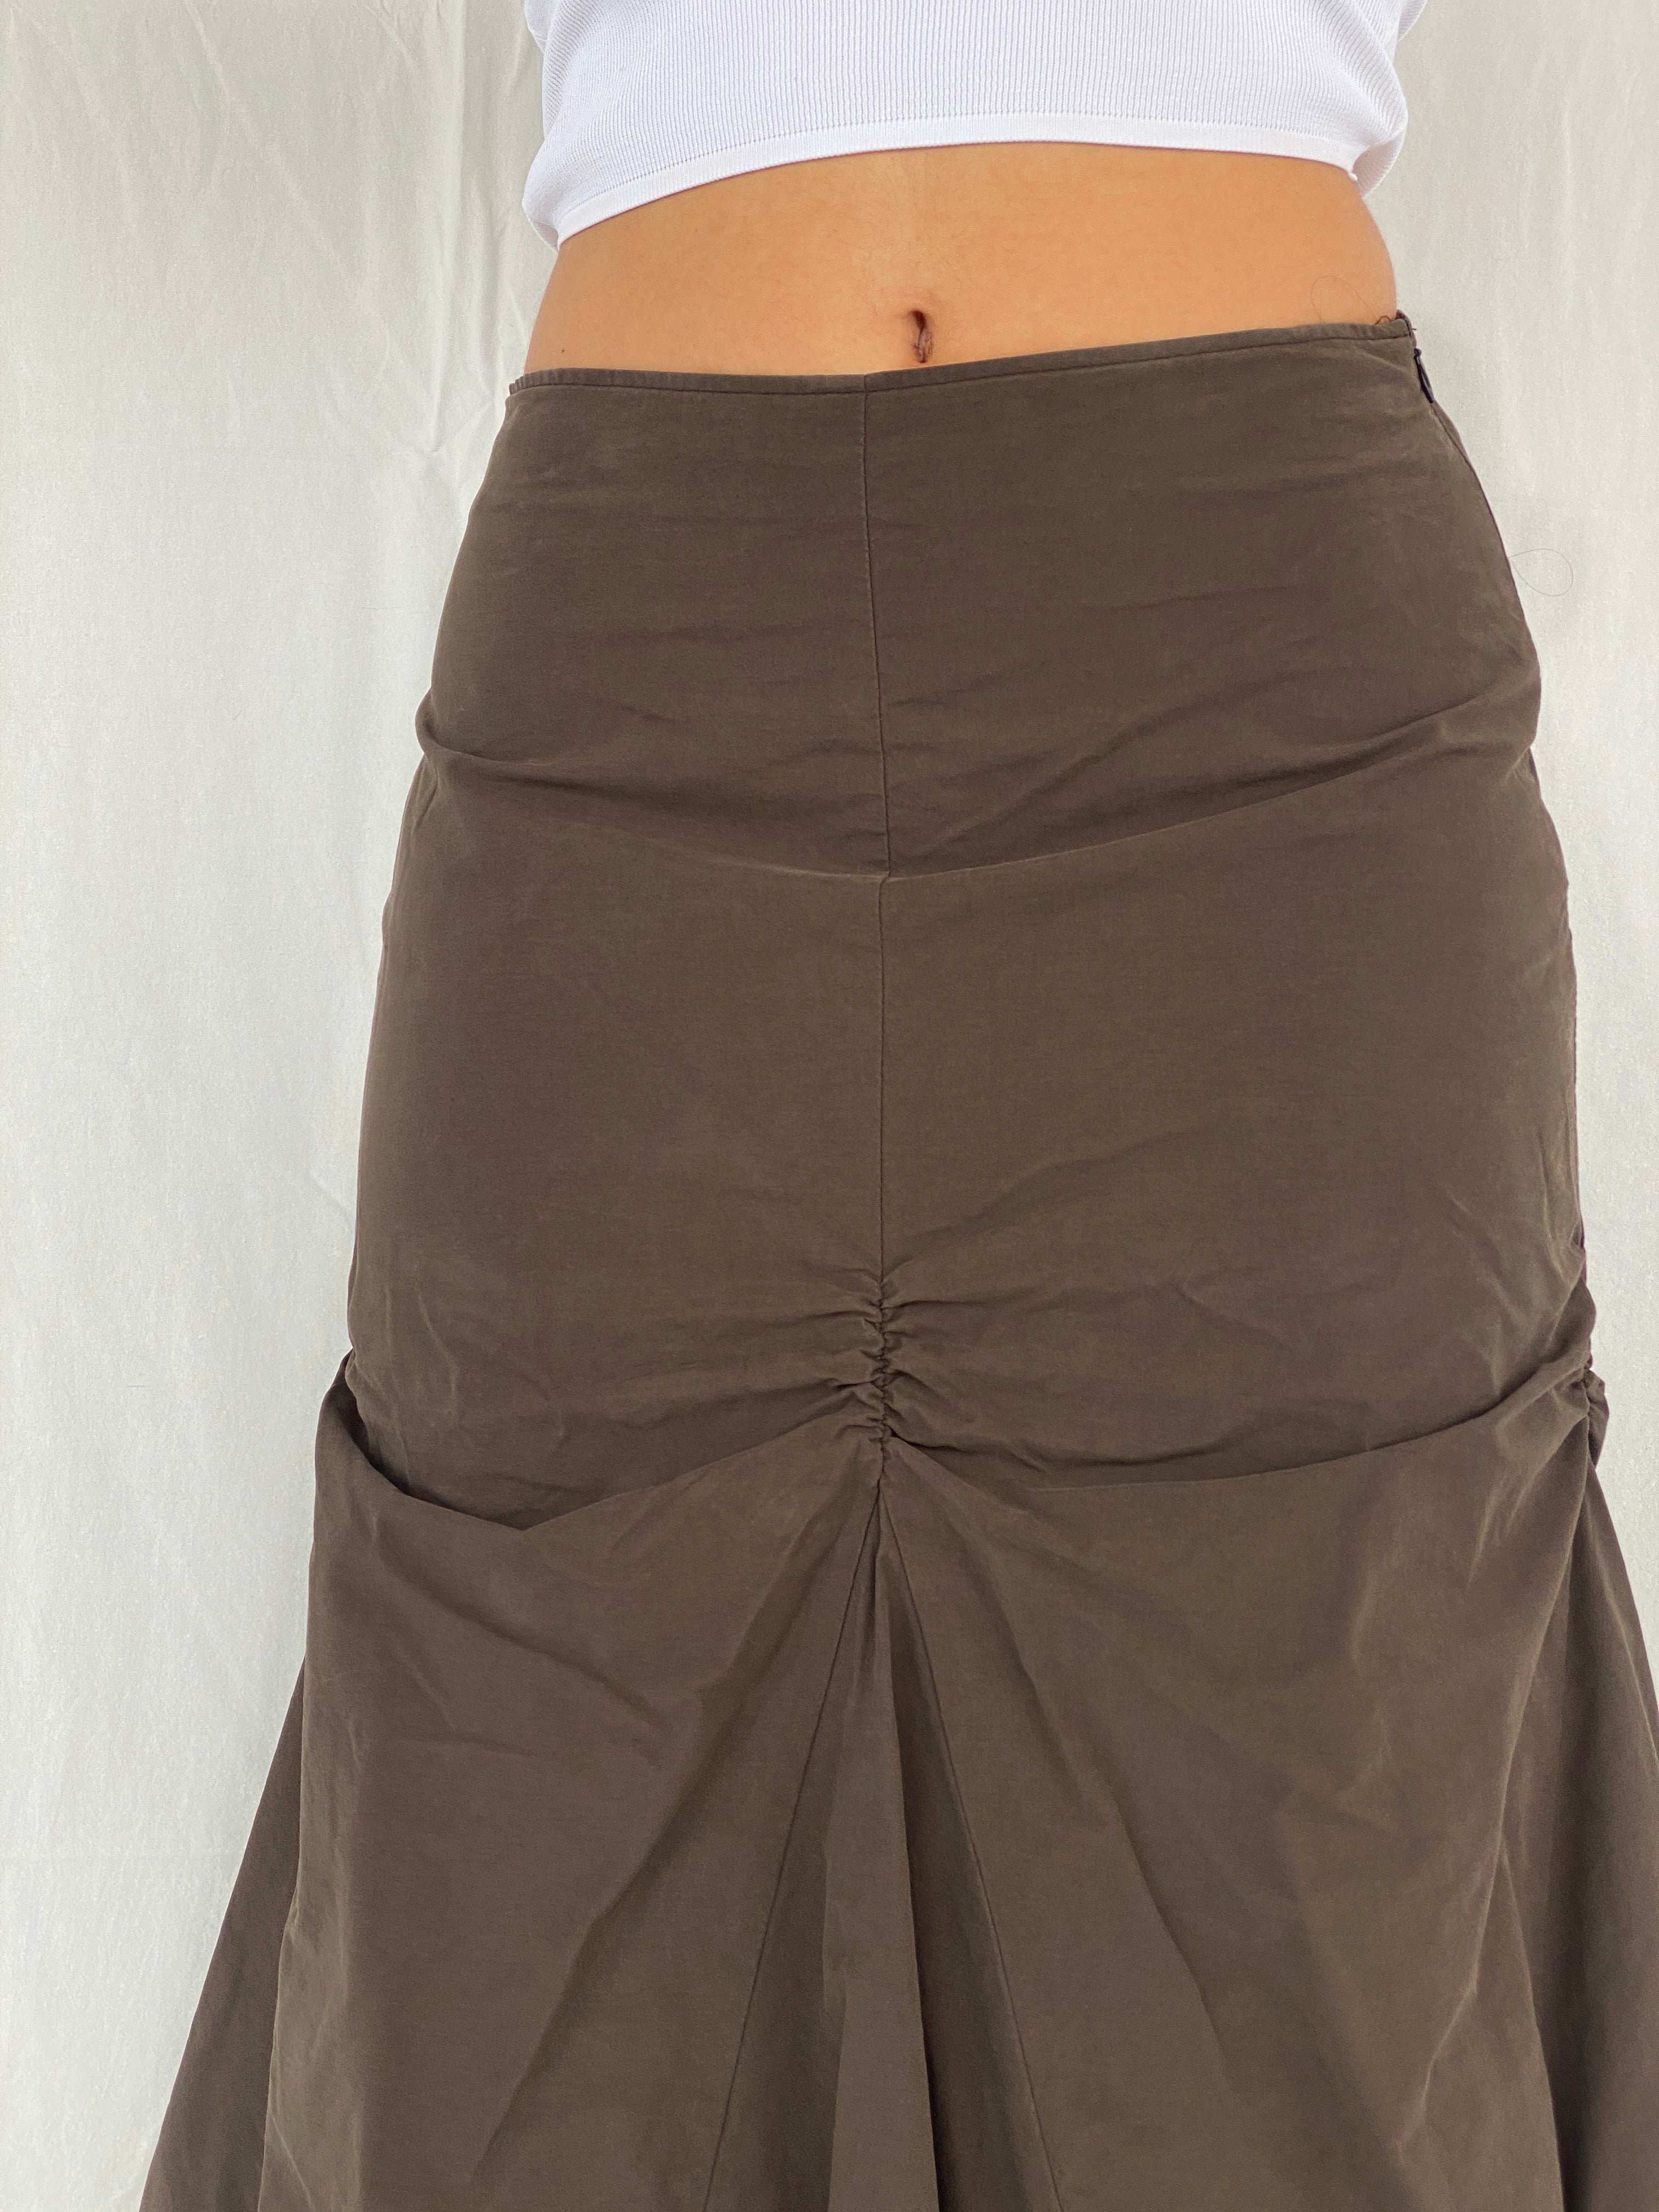 Insane Vintage 90s/00s Zaffiri Midi Ruched Skirt - Size M/L - Balagan Vintage Midi Skirt 00s, 90s, midi skirt, NEW IN, Rama